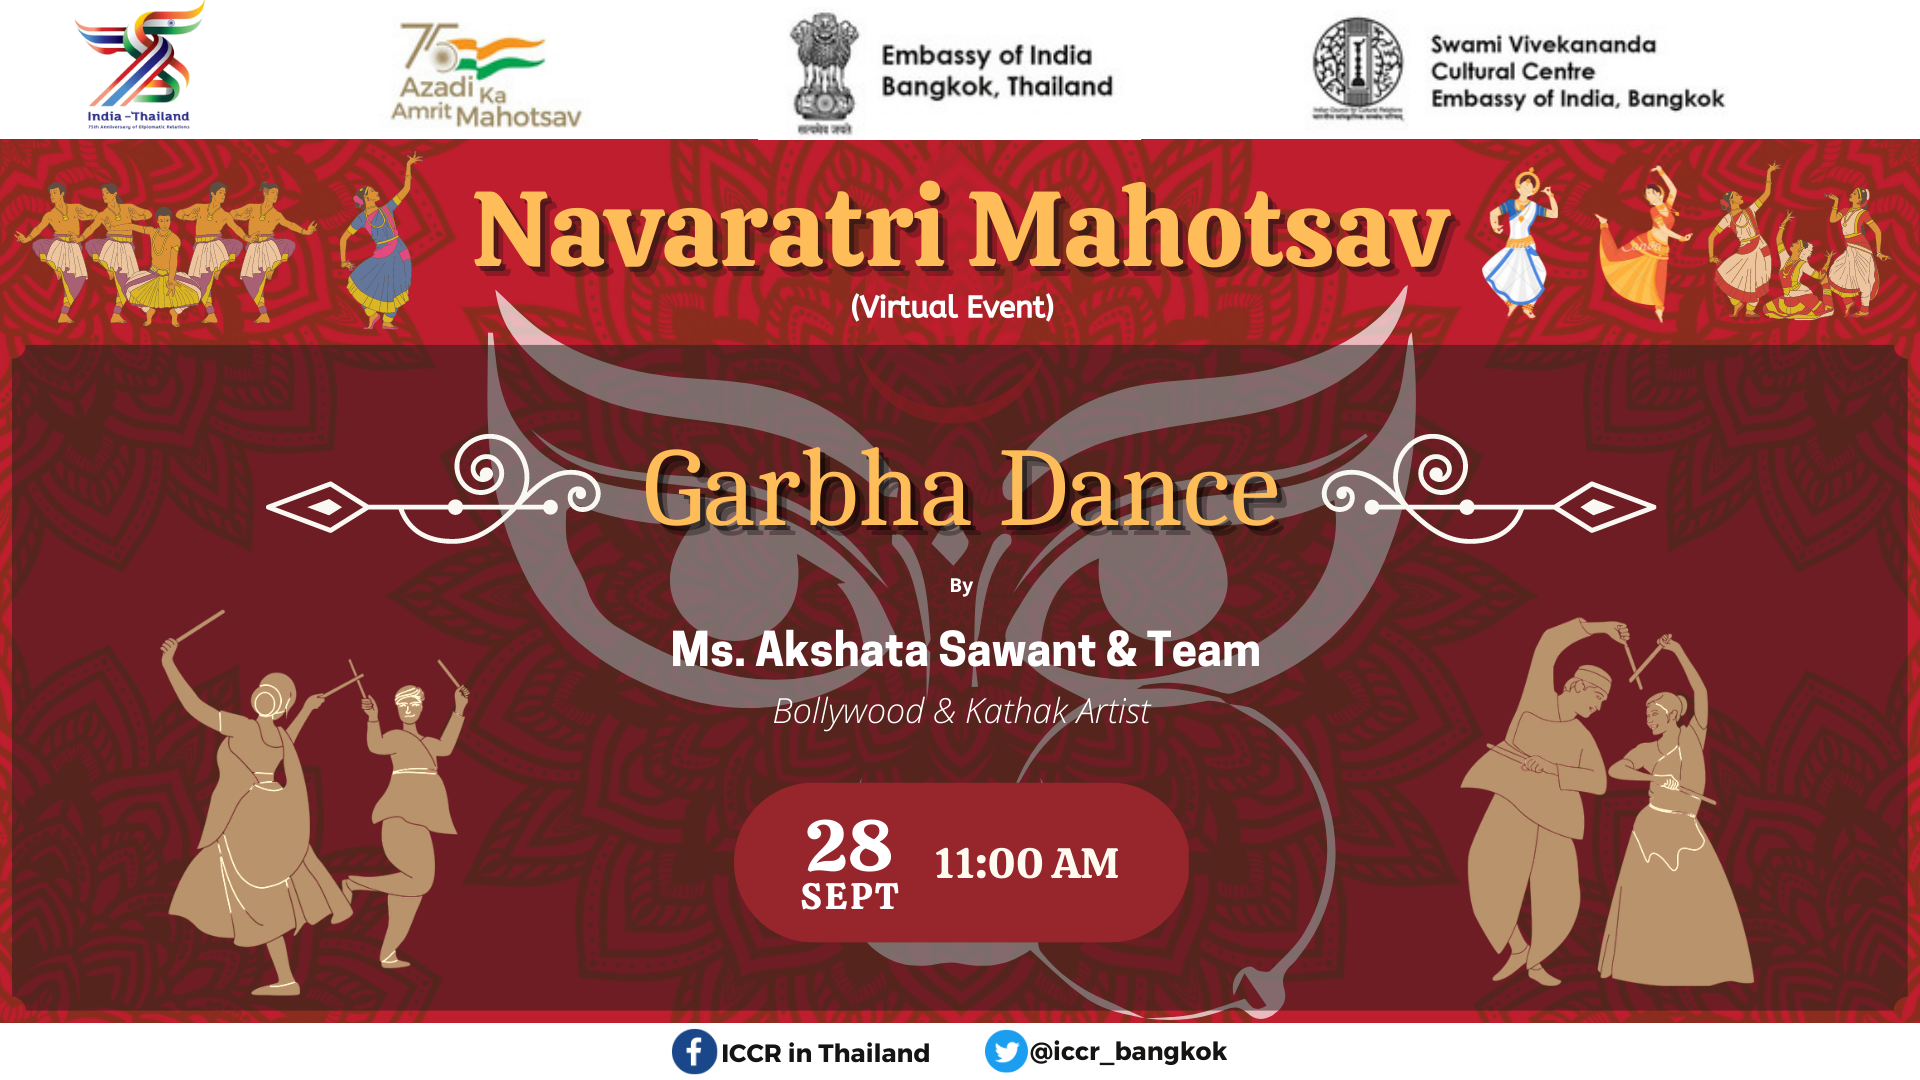 The SVCC's Embassy of India, Bangkok, is organizing a “Navratri Mahotsav” a virtual event in celebration of the Navratri Festival  -Navratri Day 3 